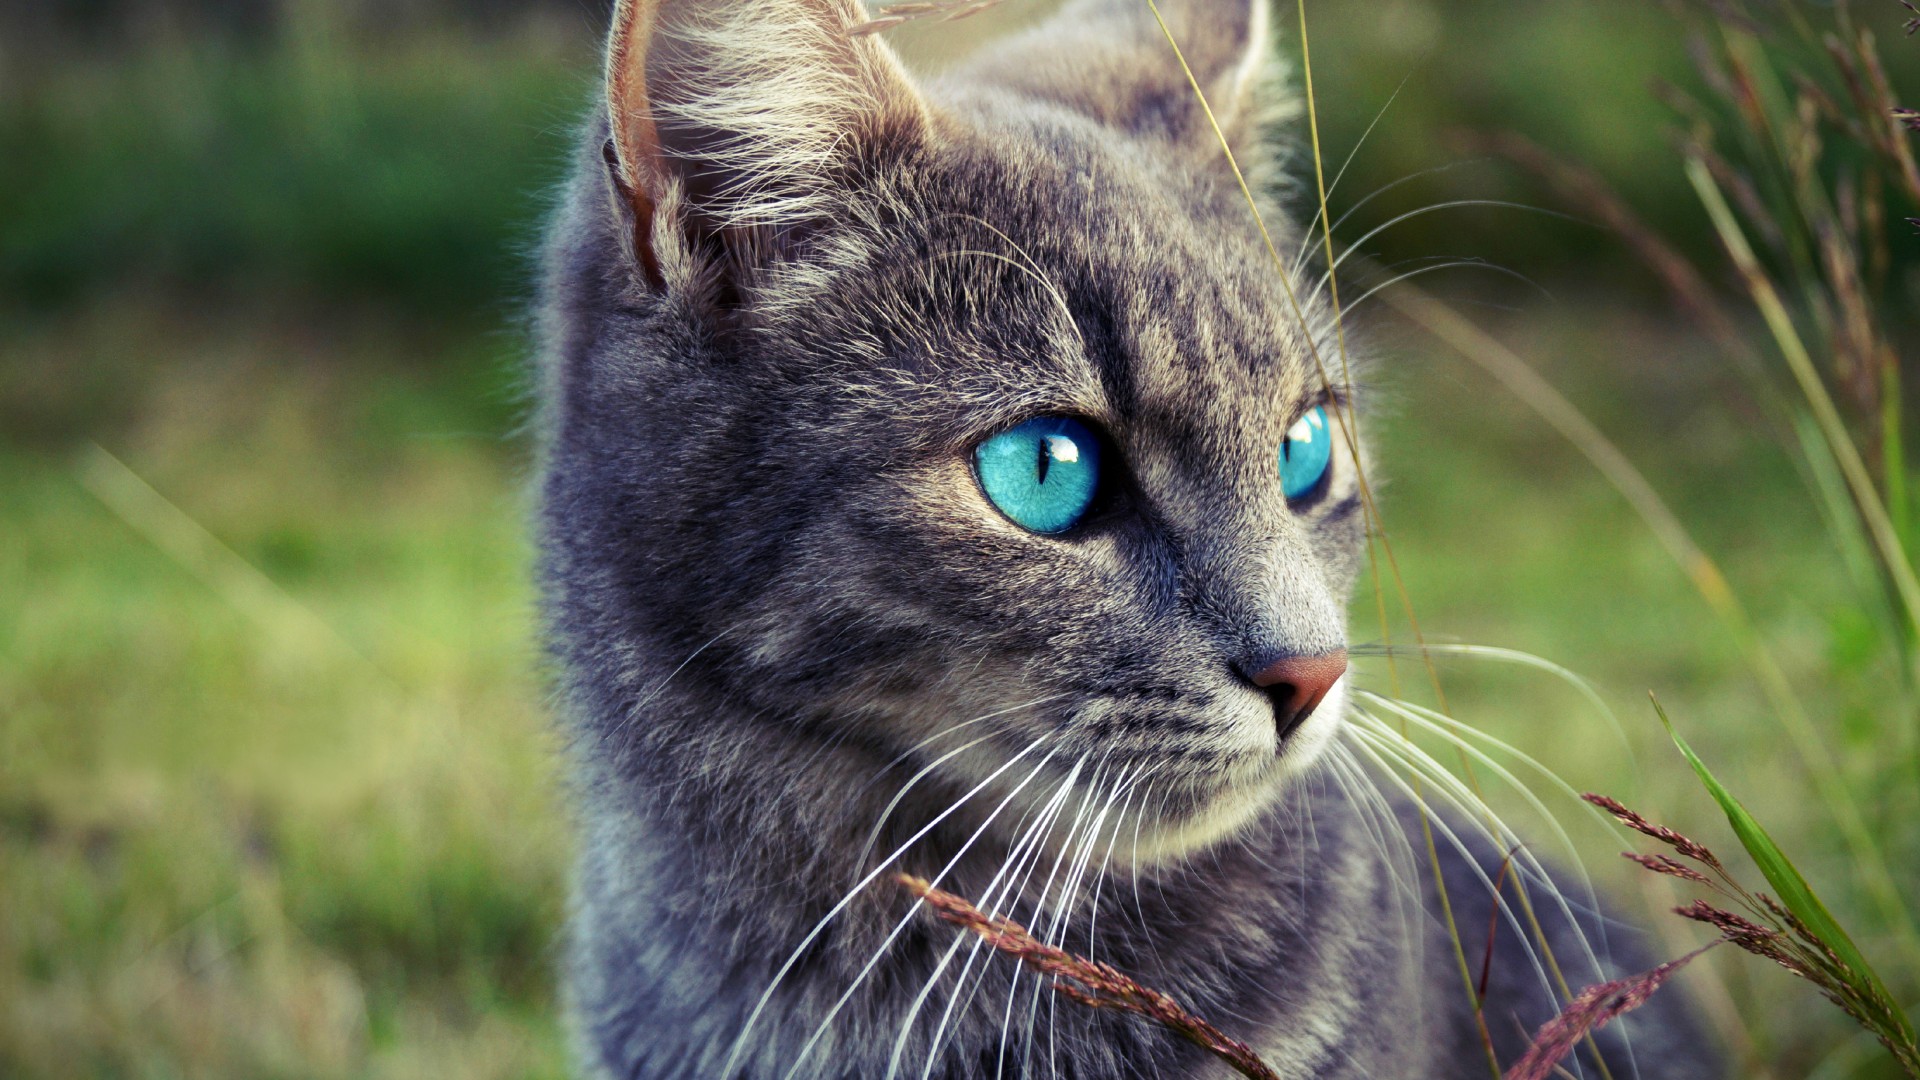 pretty grey tabby kitten with blue eyes